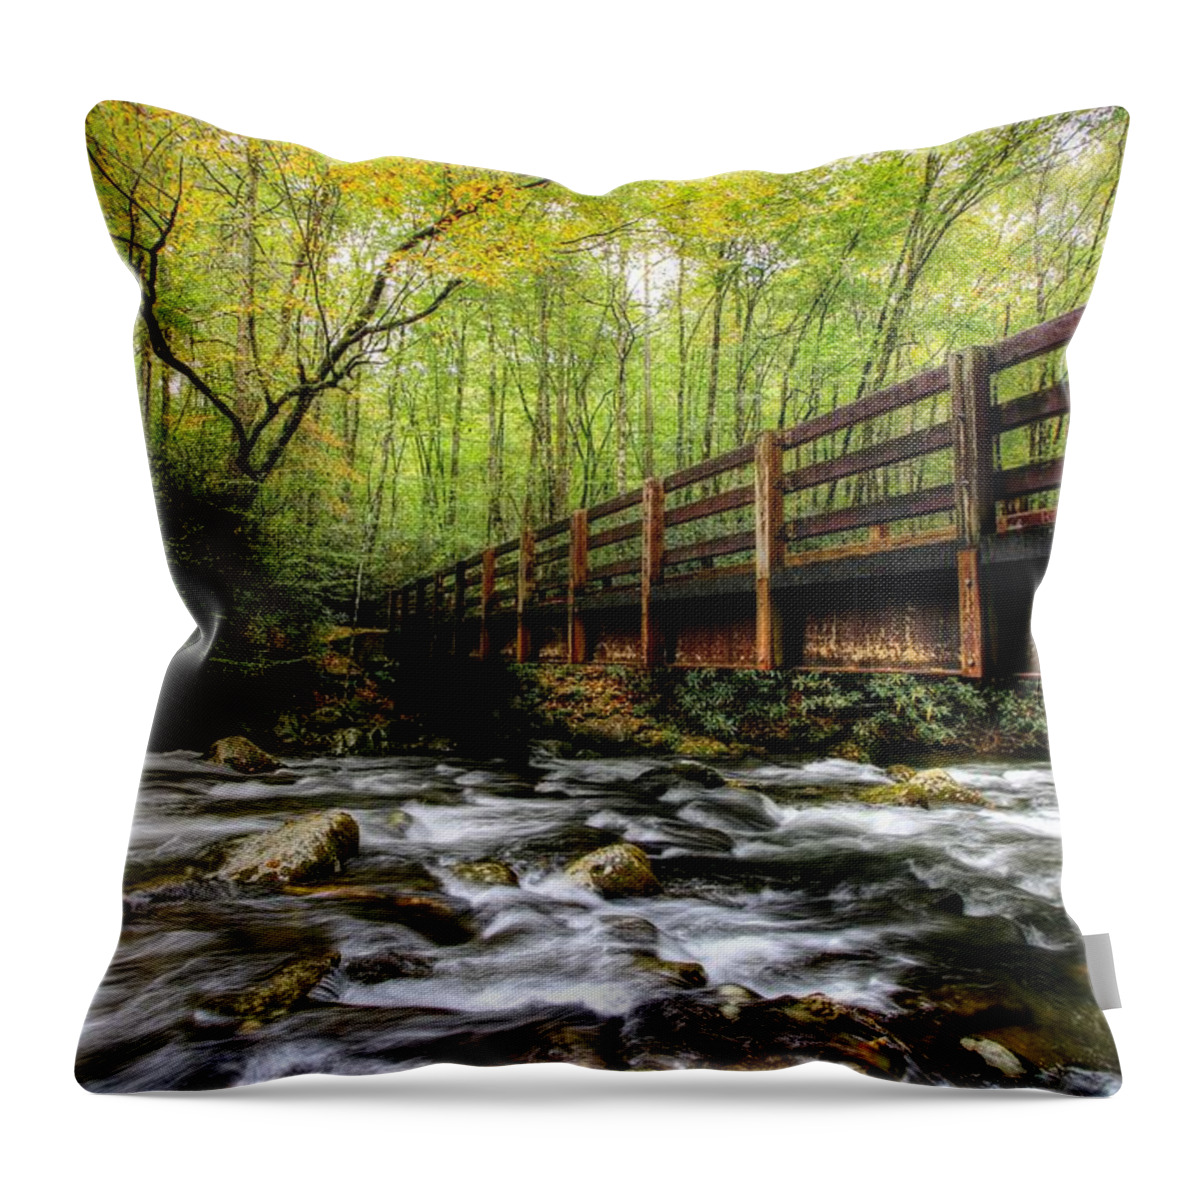 Kephart Prong Bridge Throw Pillow featuring the photograph Autumn Color Begins On The Kephart Prong Bridge by Carol Montoya